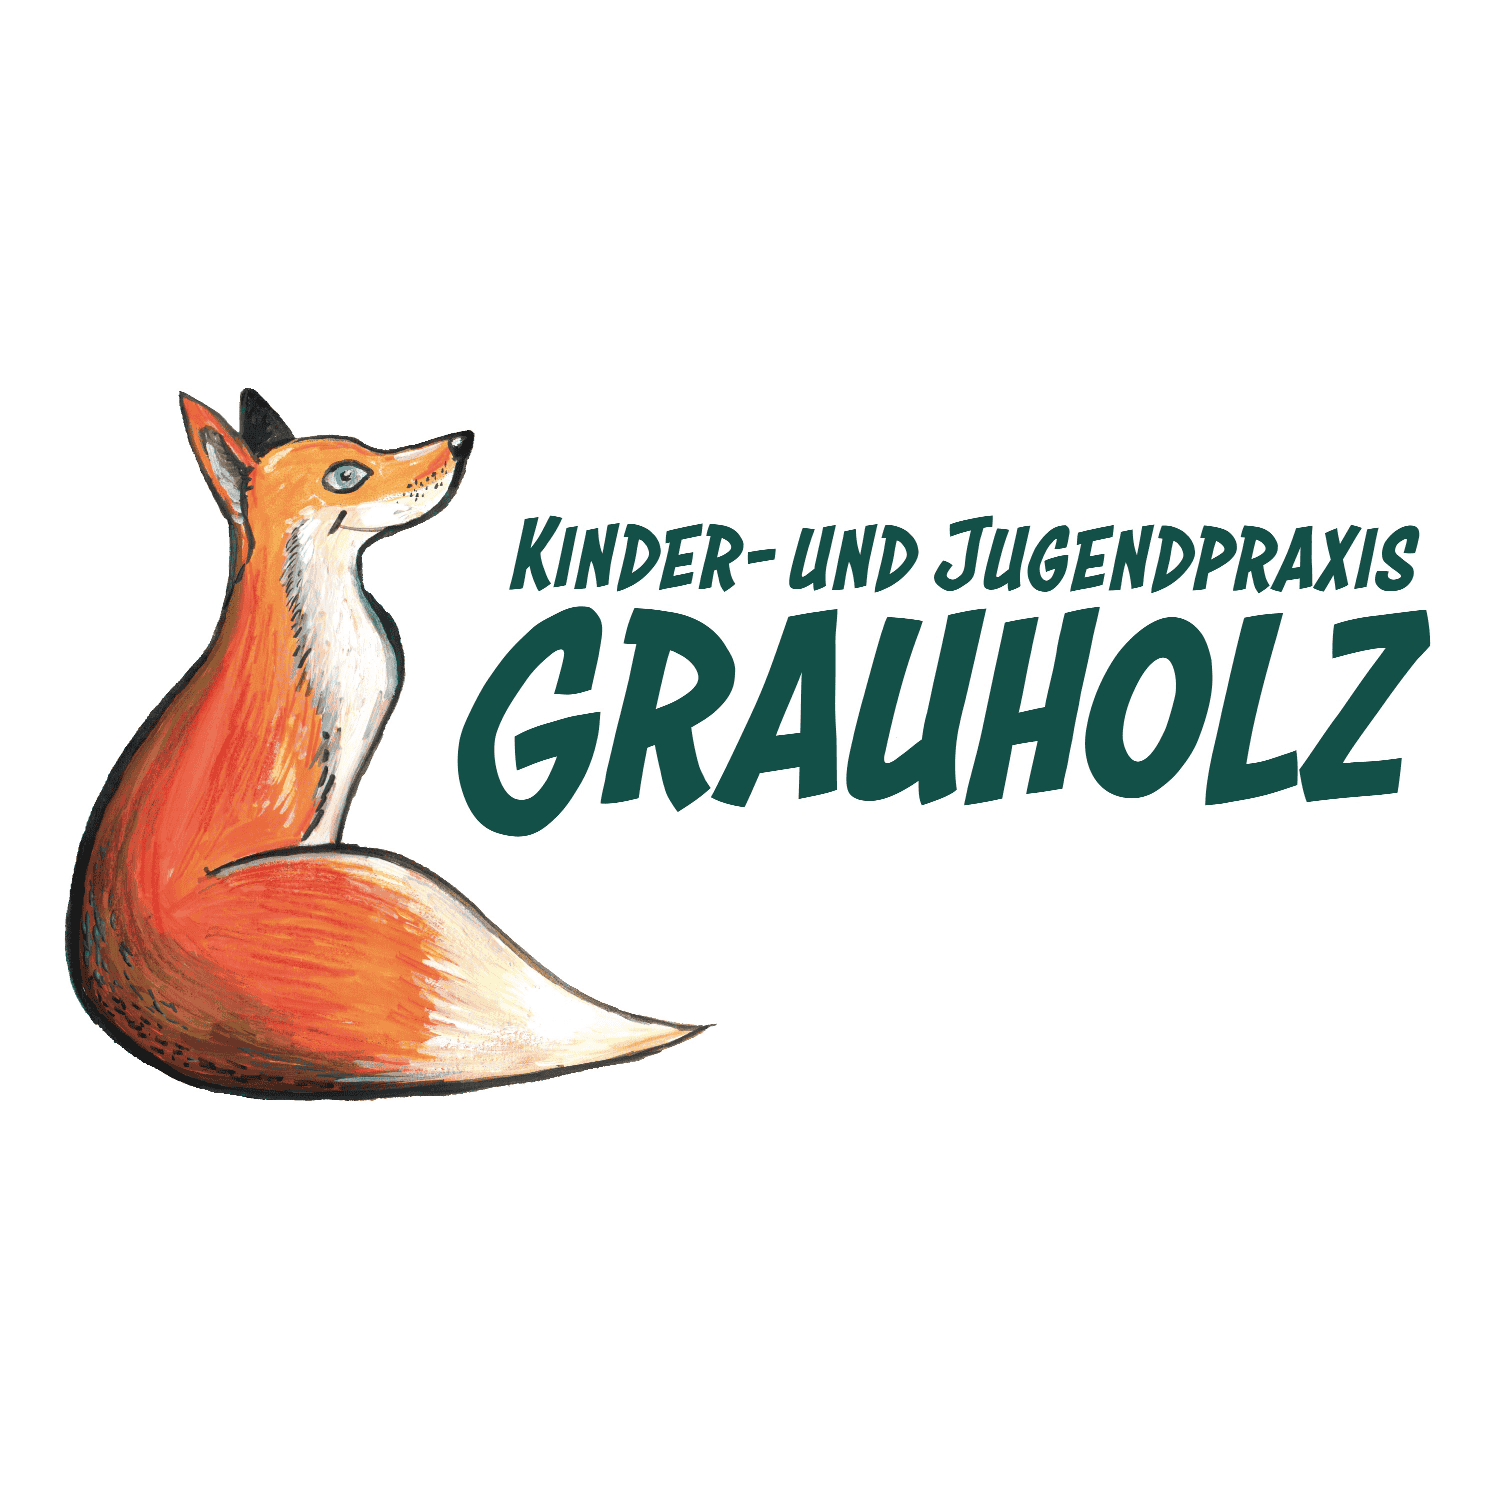 Kinder- und Jugendpraxis Grauholz AG